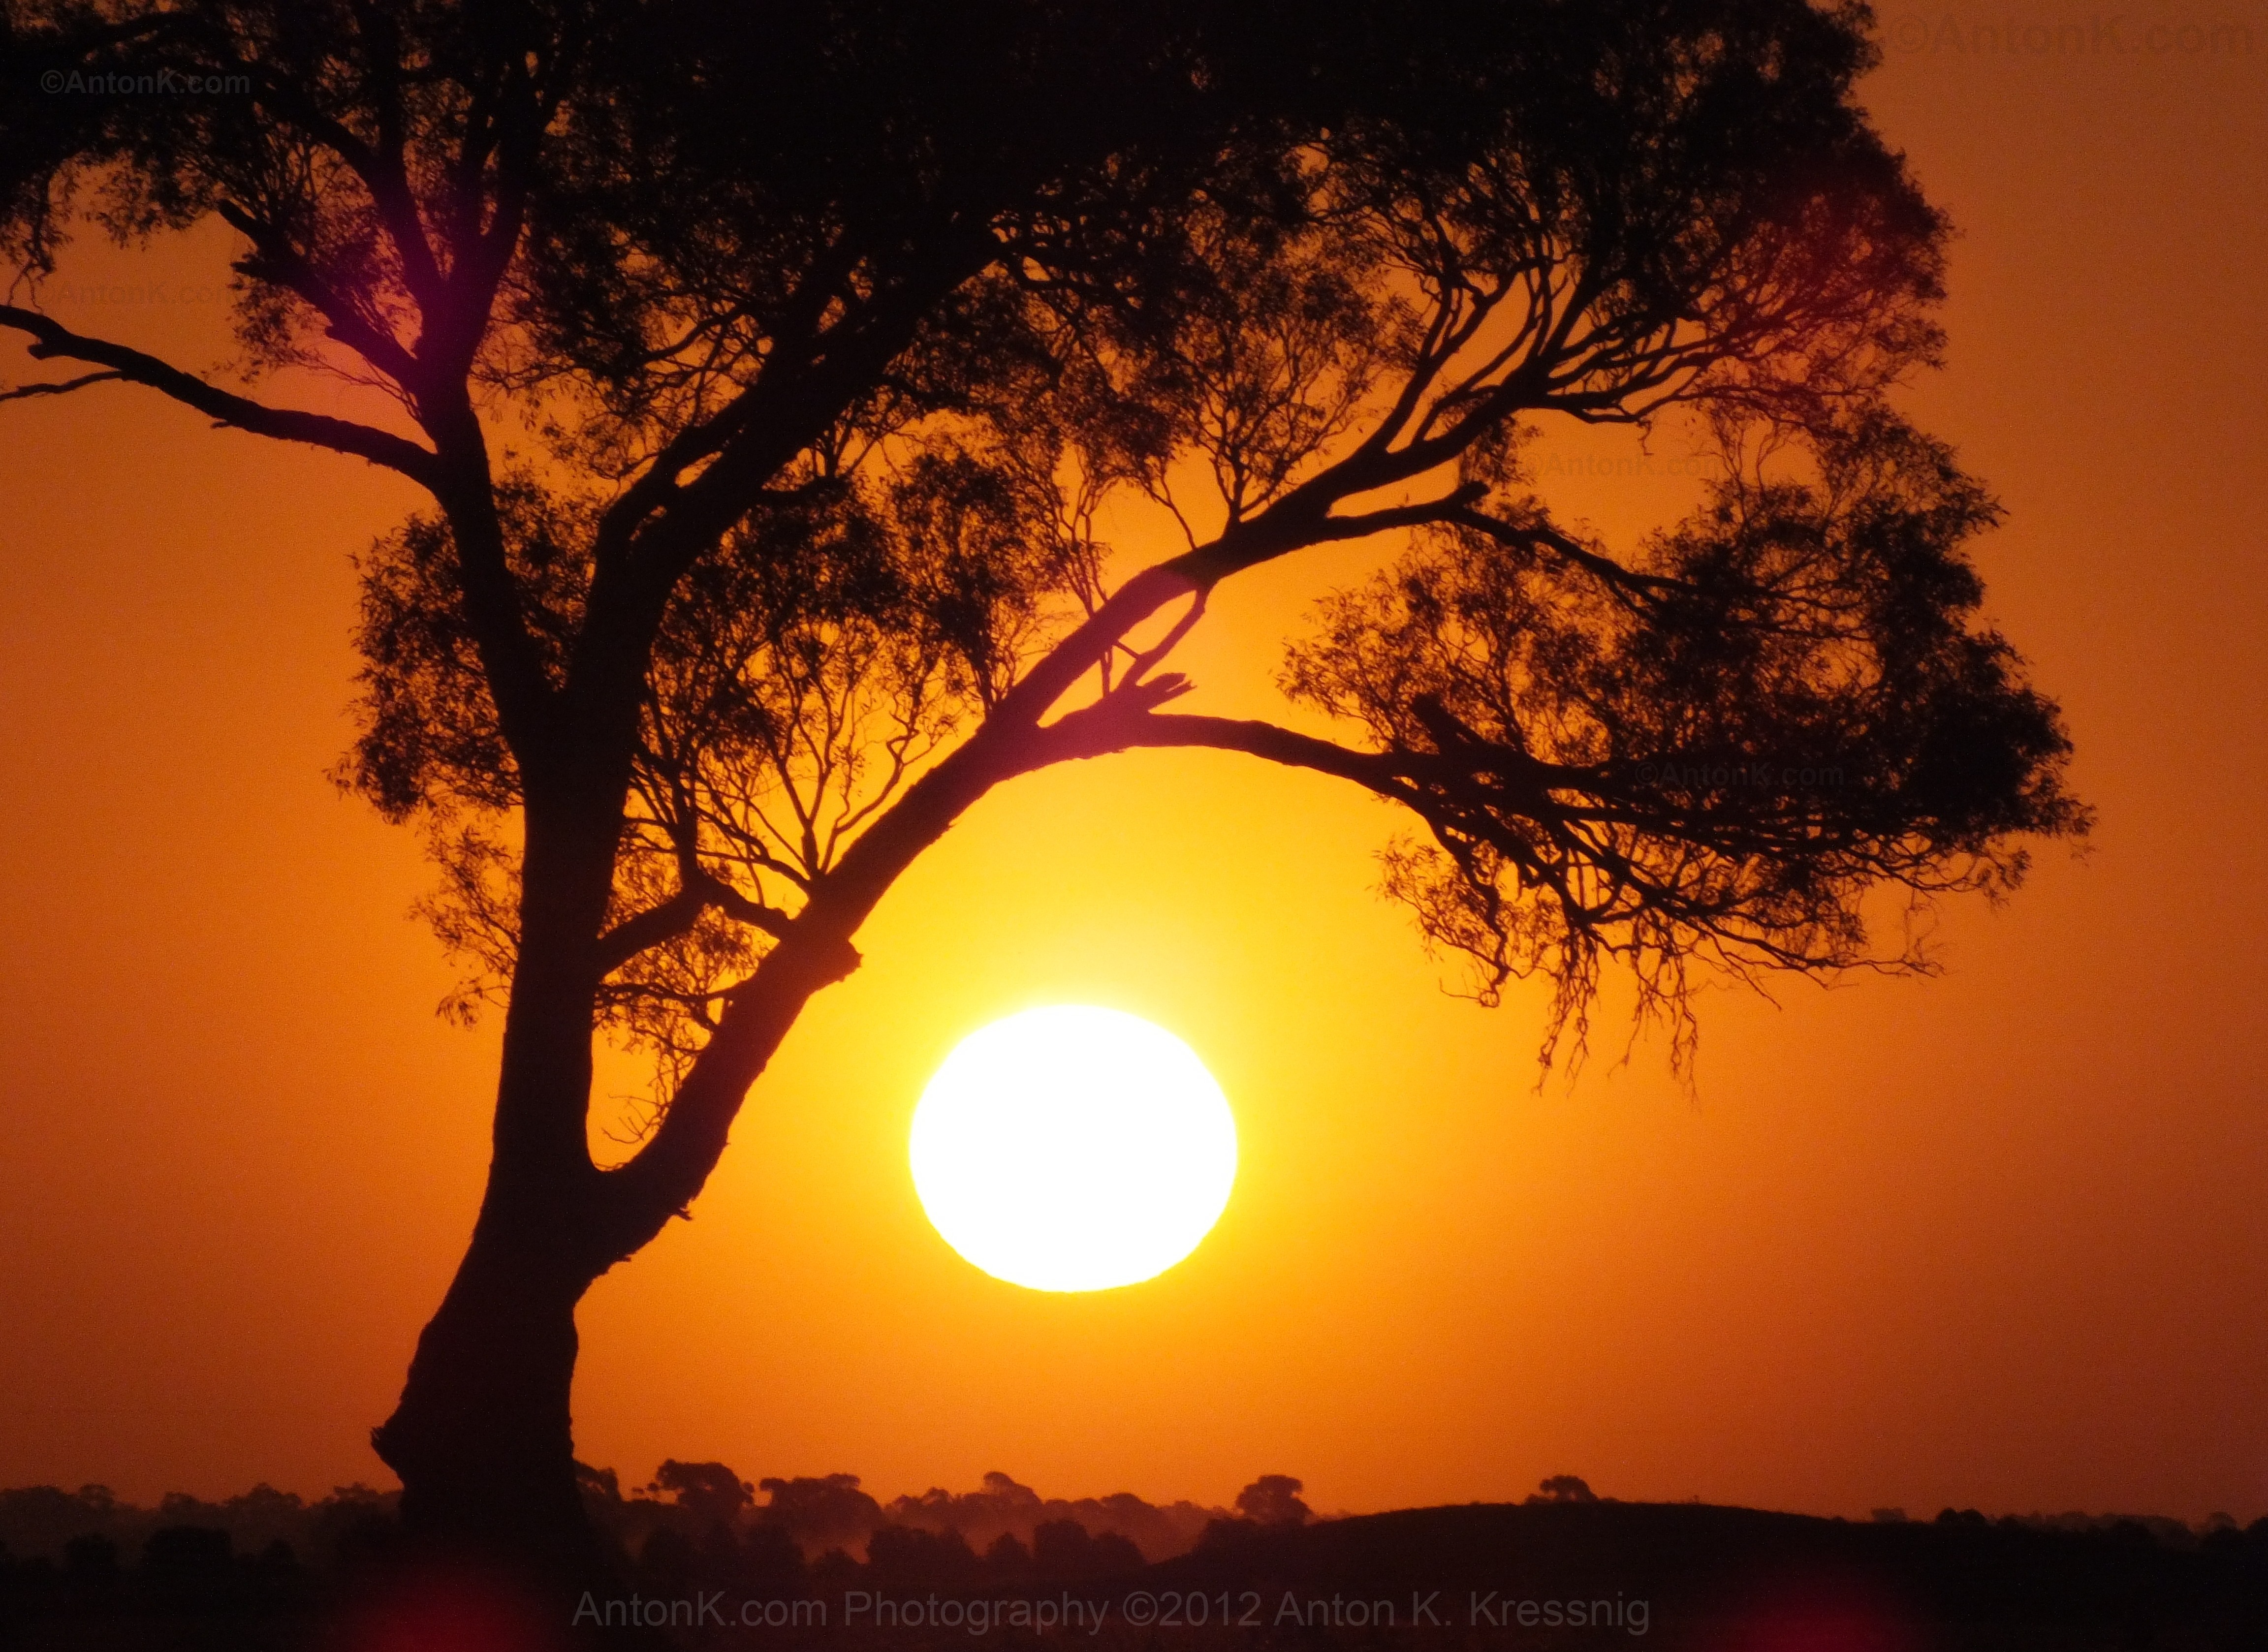 Western Highway Middle Creek Victoria Australia summer sunset Gum Tree photo by Anton K Kressnig